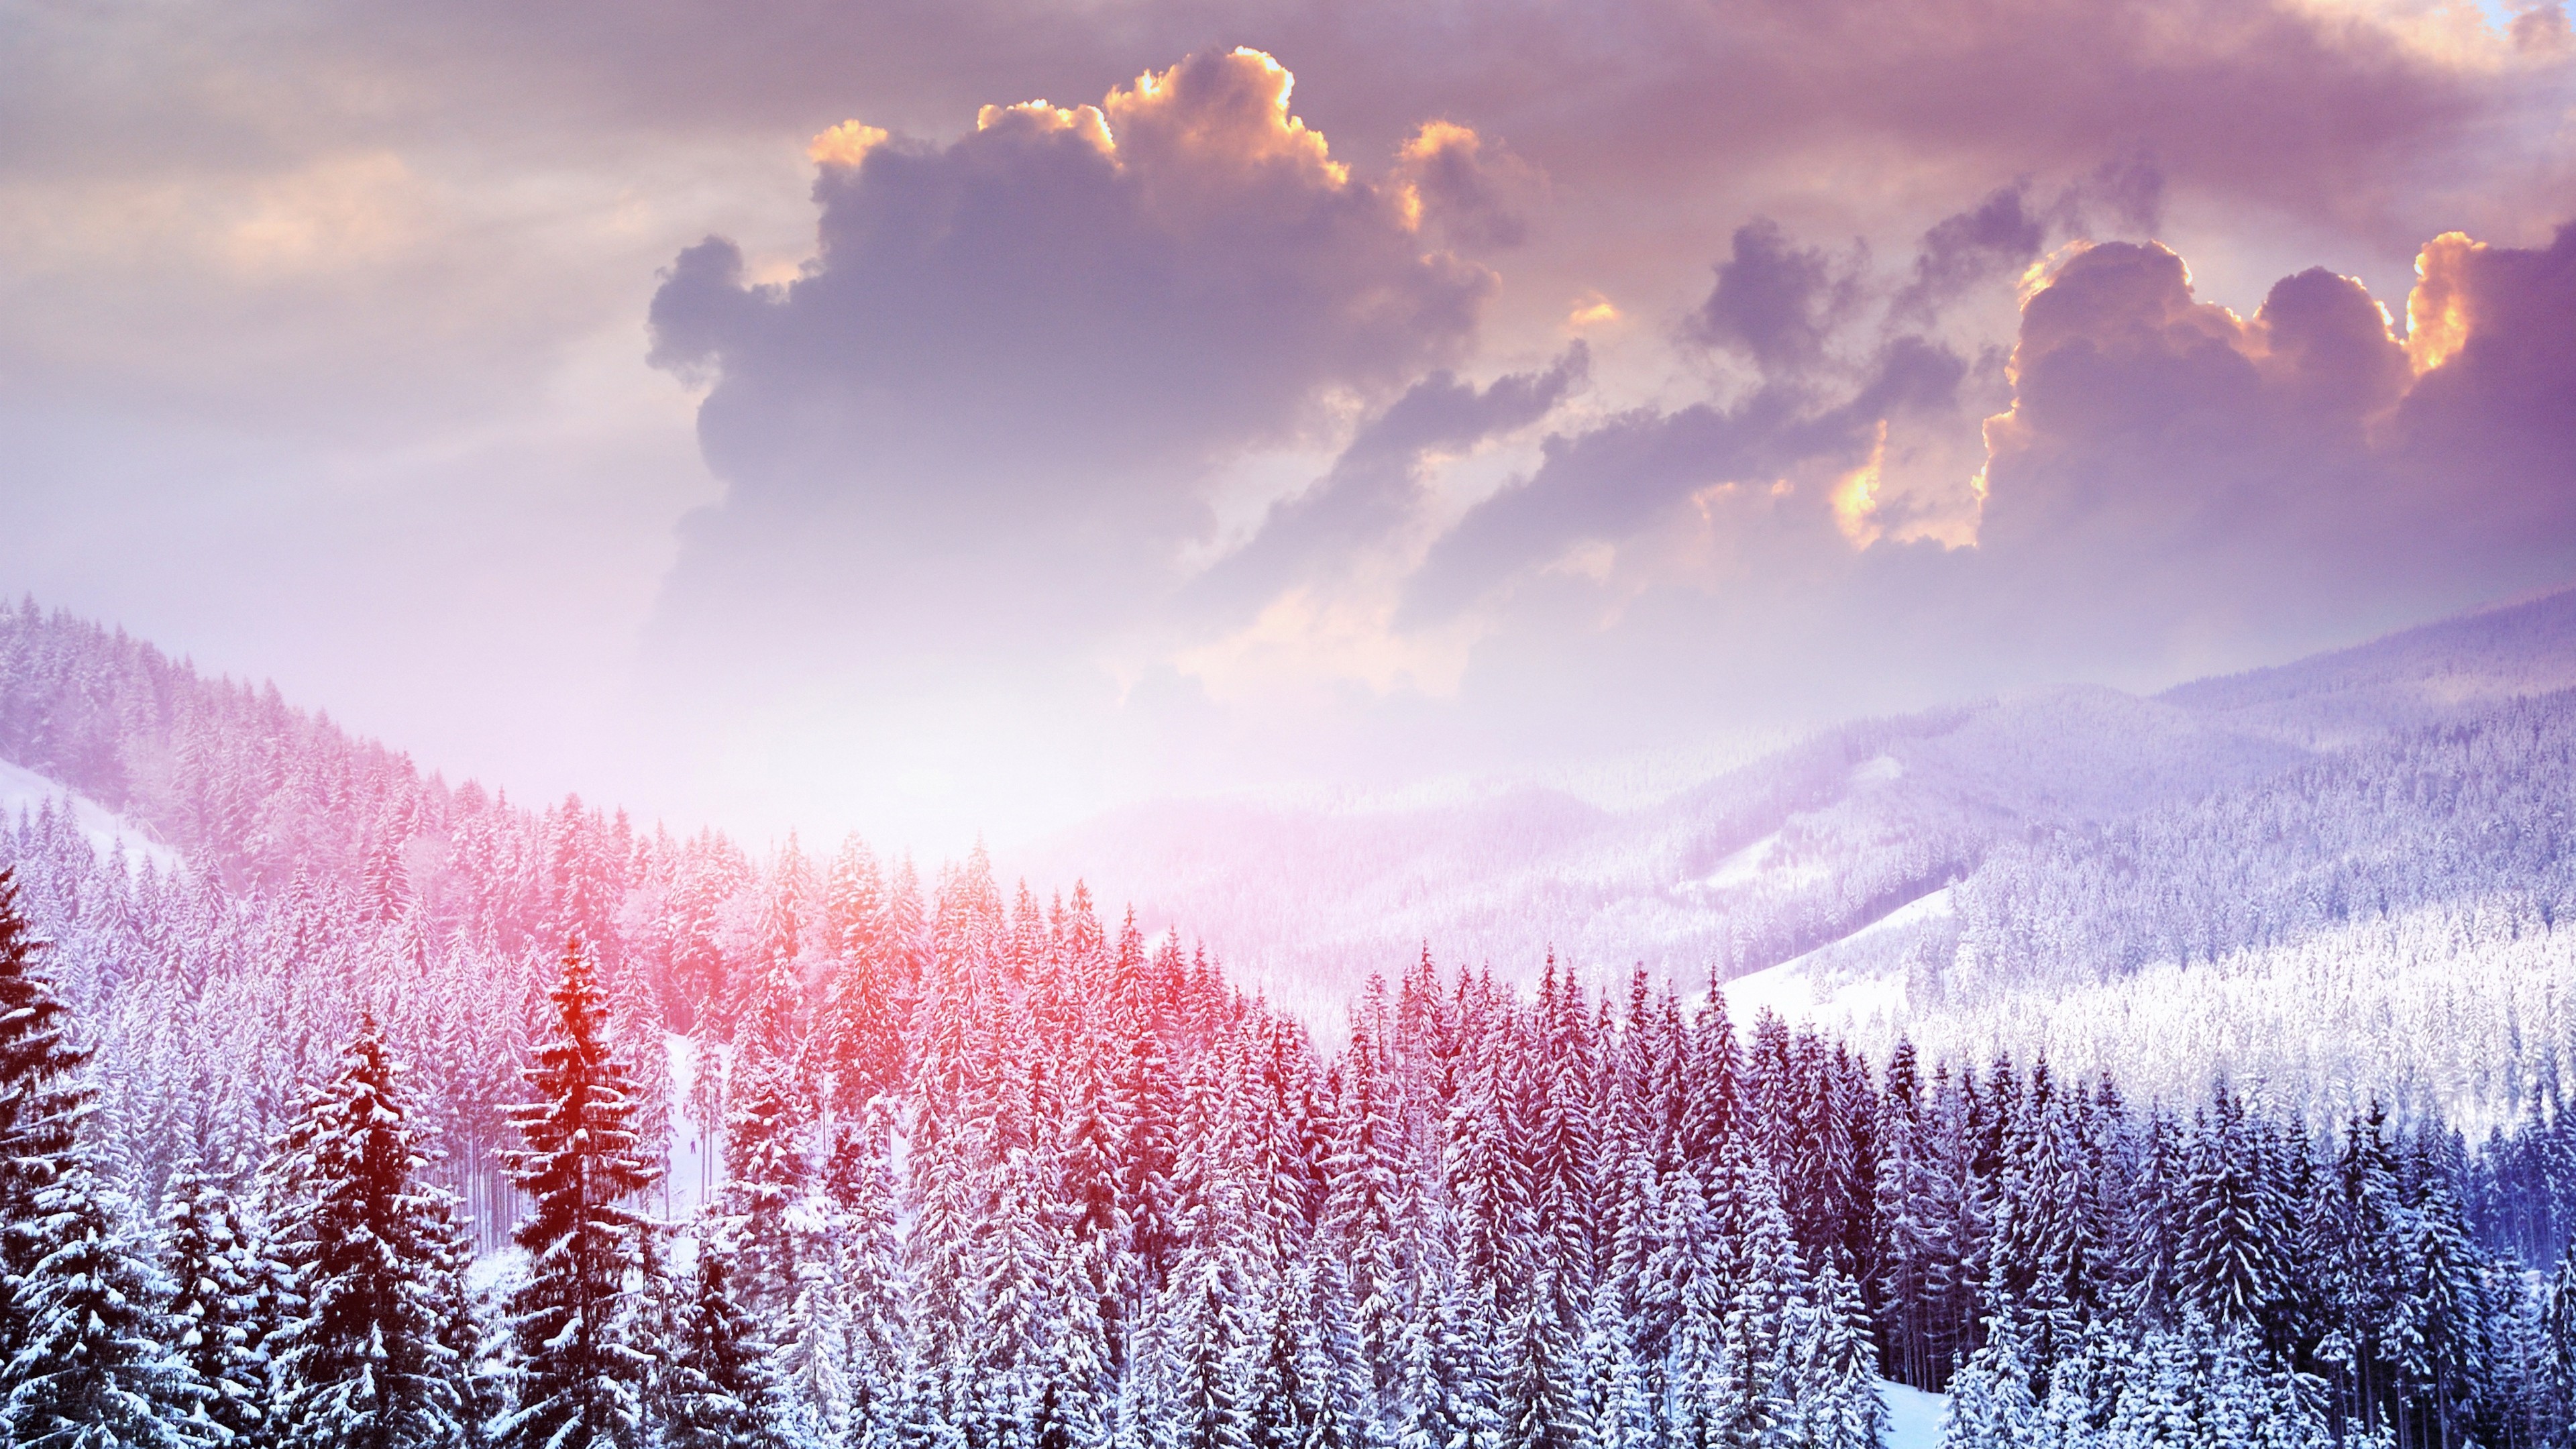 Winter Landscape Of Snow Forest Wallpaper